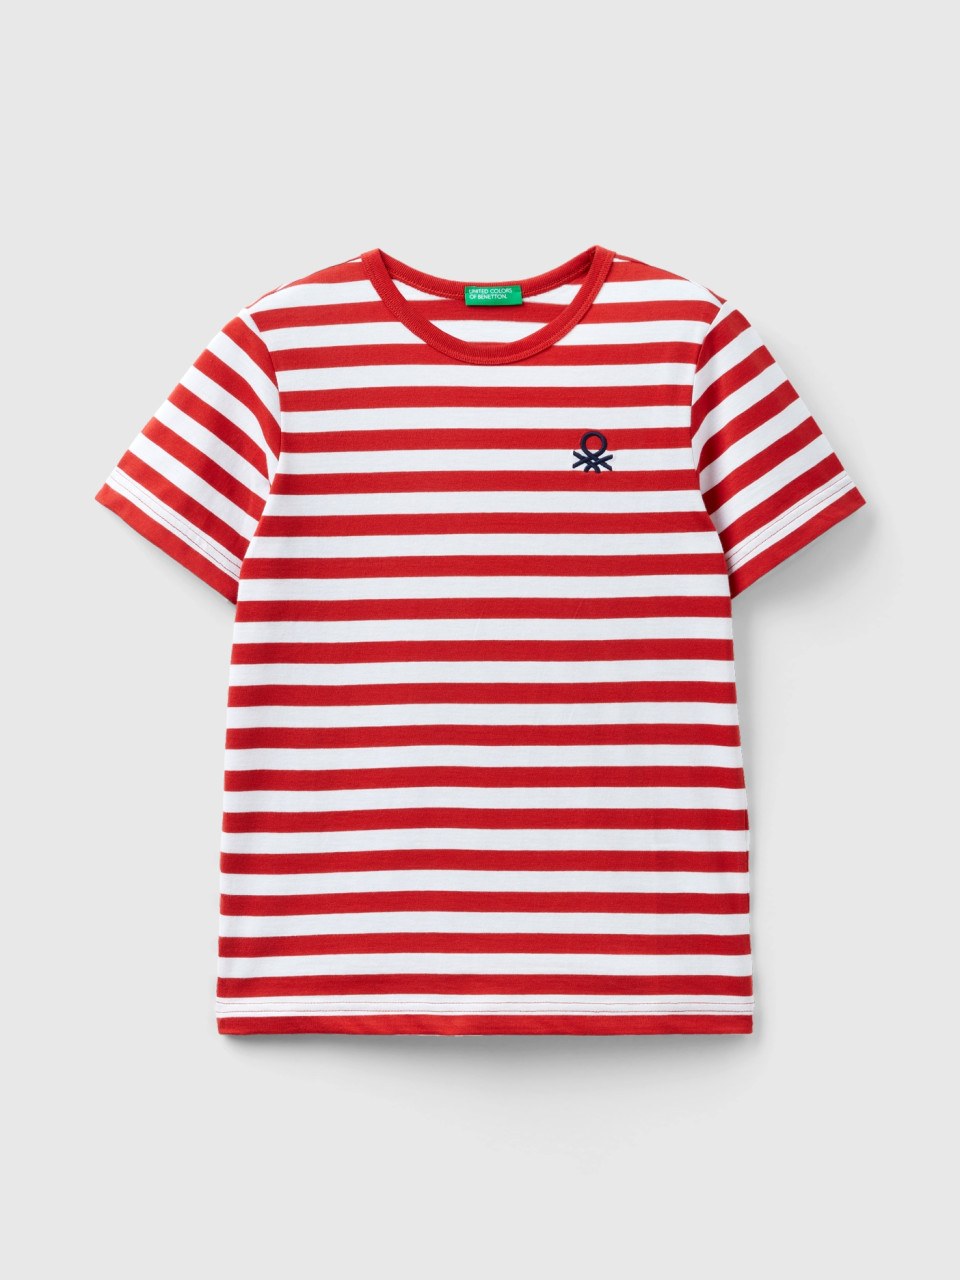 Benetton, Striped 100% Cotton T-shirt, Red, Kids